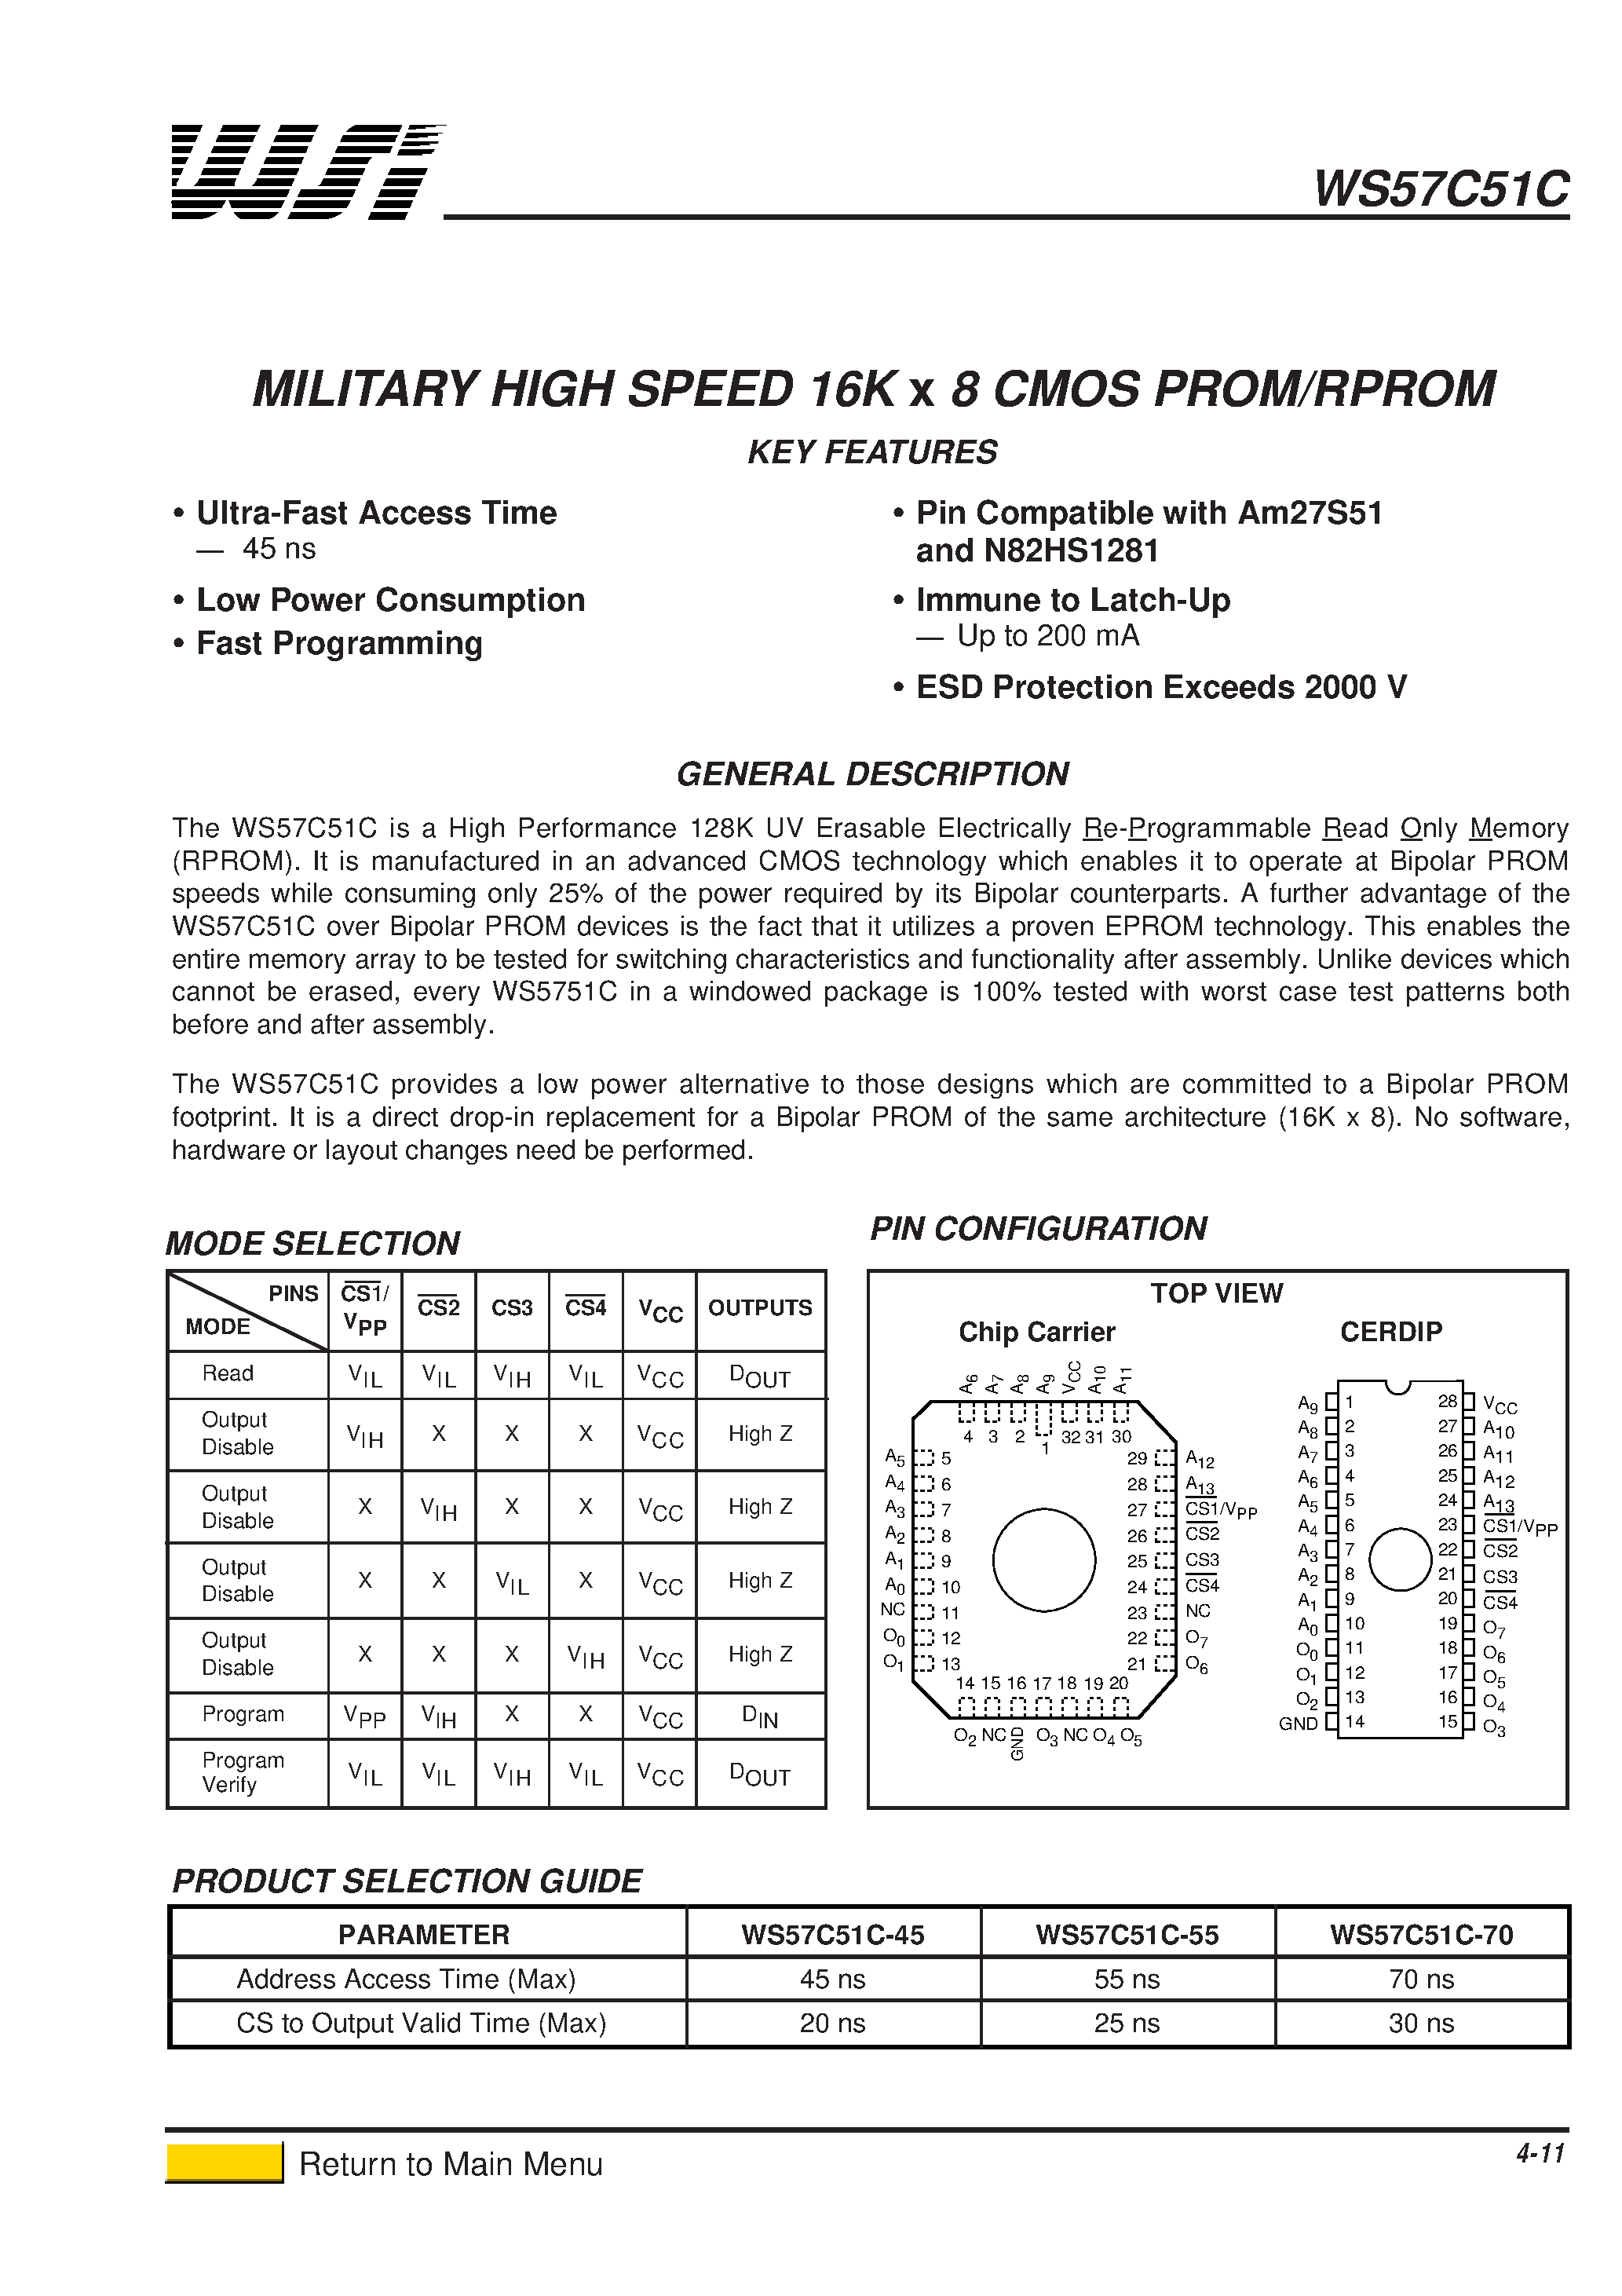 Datasheet WS57C51C-45 - MILITARY HIGH SPEED 16K x 8 CMOS PROM/RPROM page 1